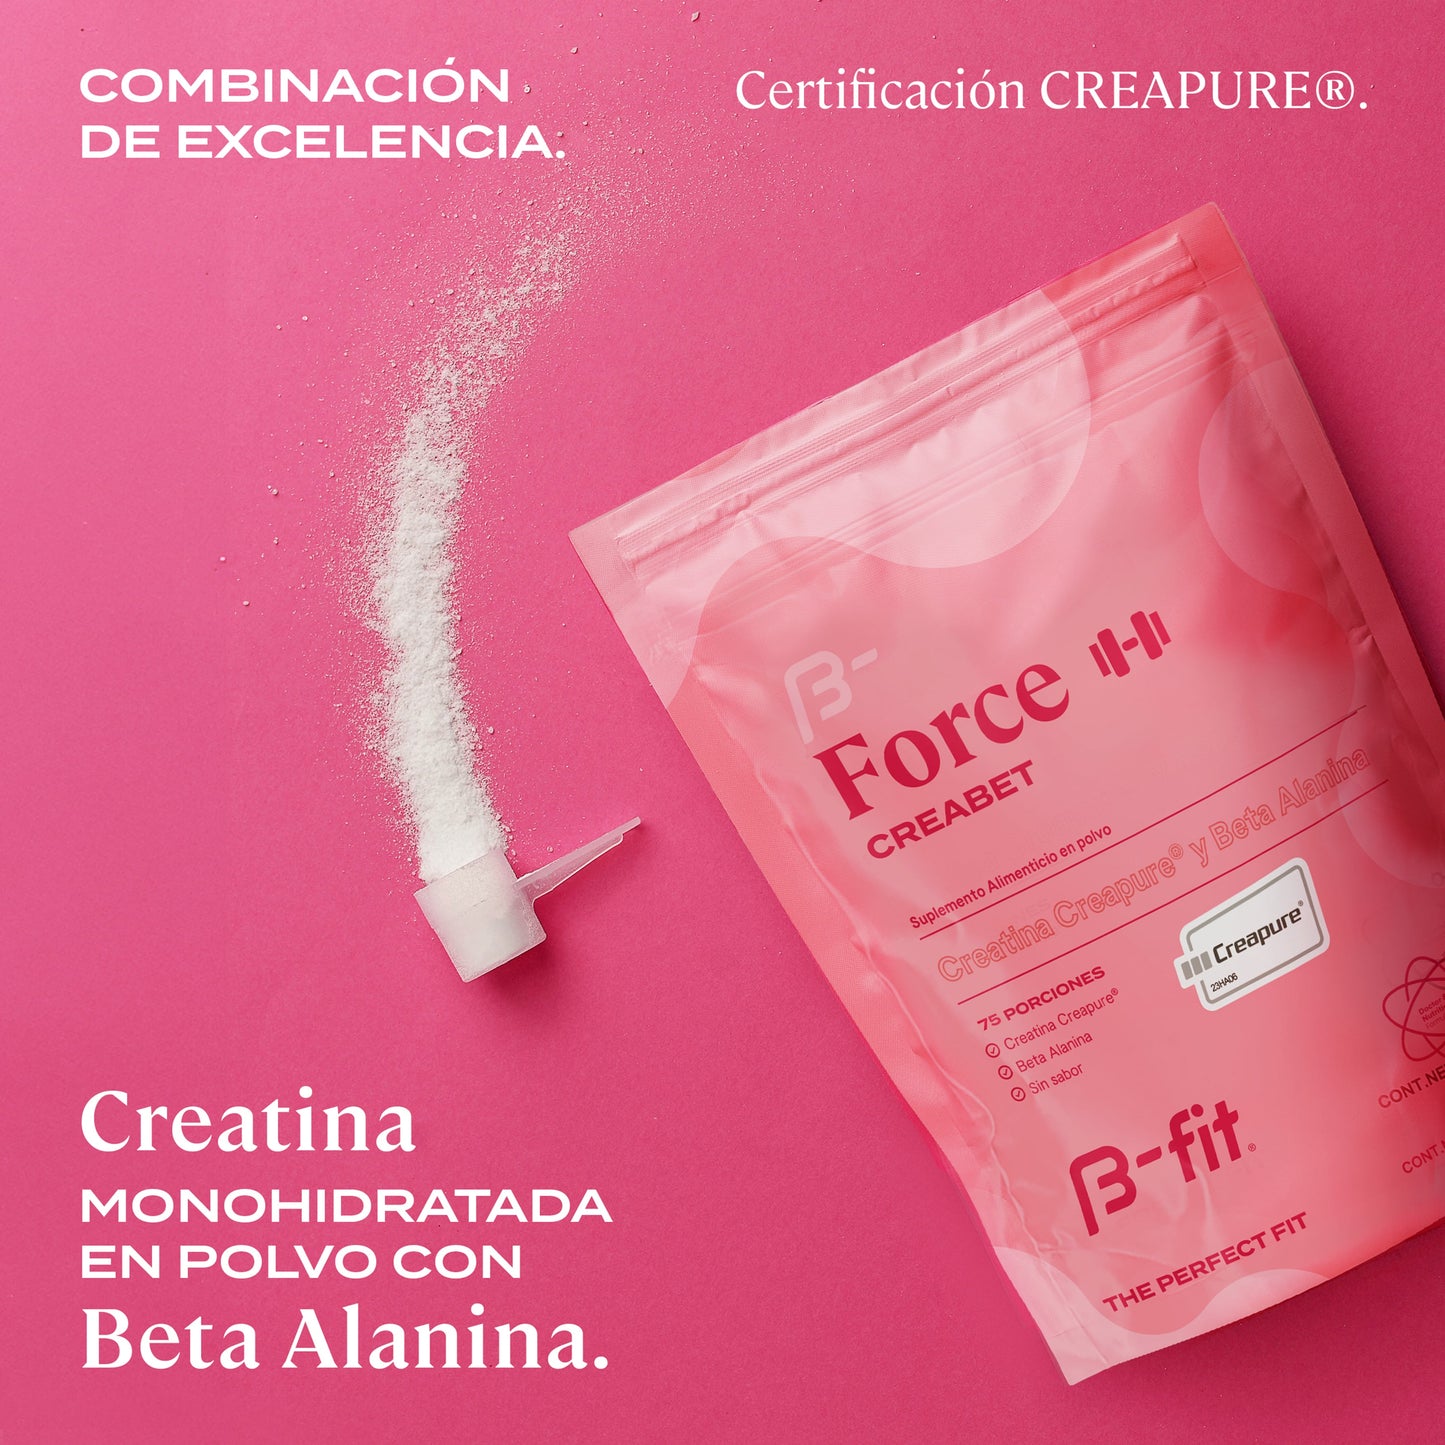 Force Creabet Creatina + Beta Alanina Creapure® 300gr (75 servicios) | B-fit